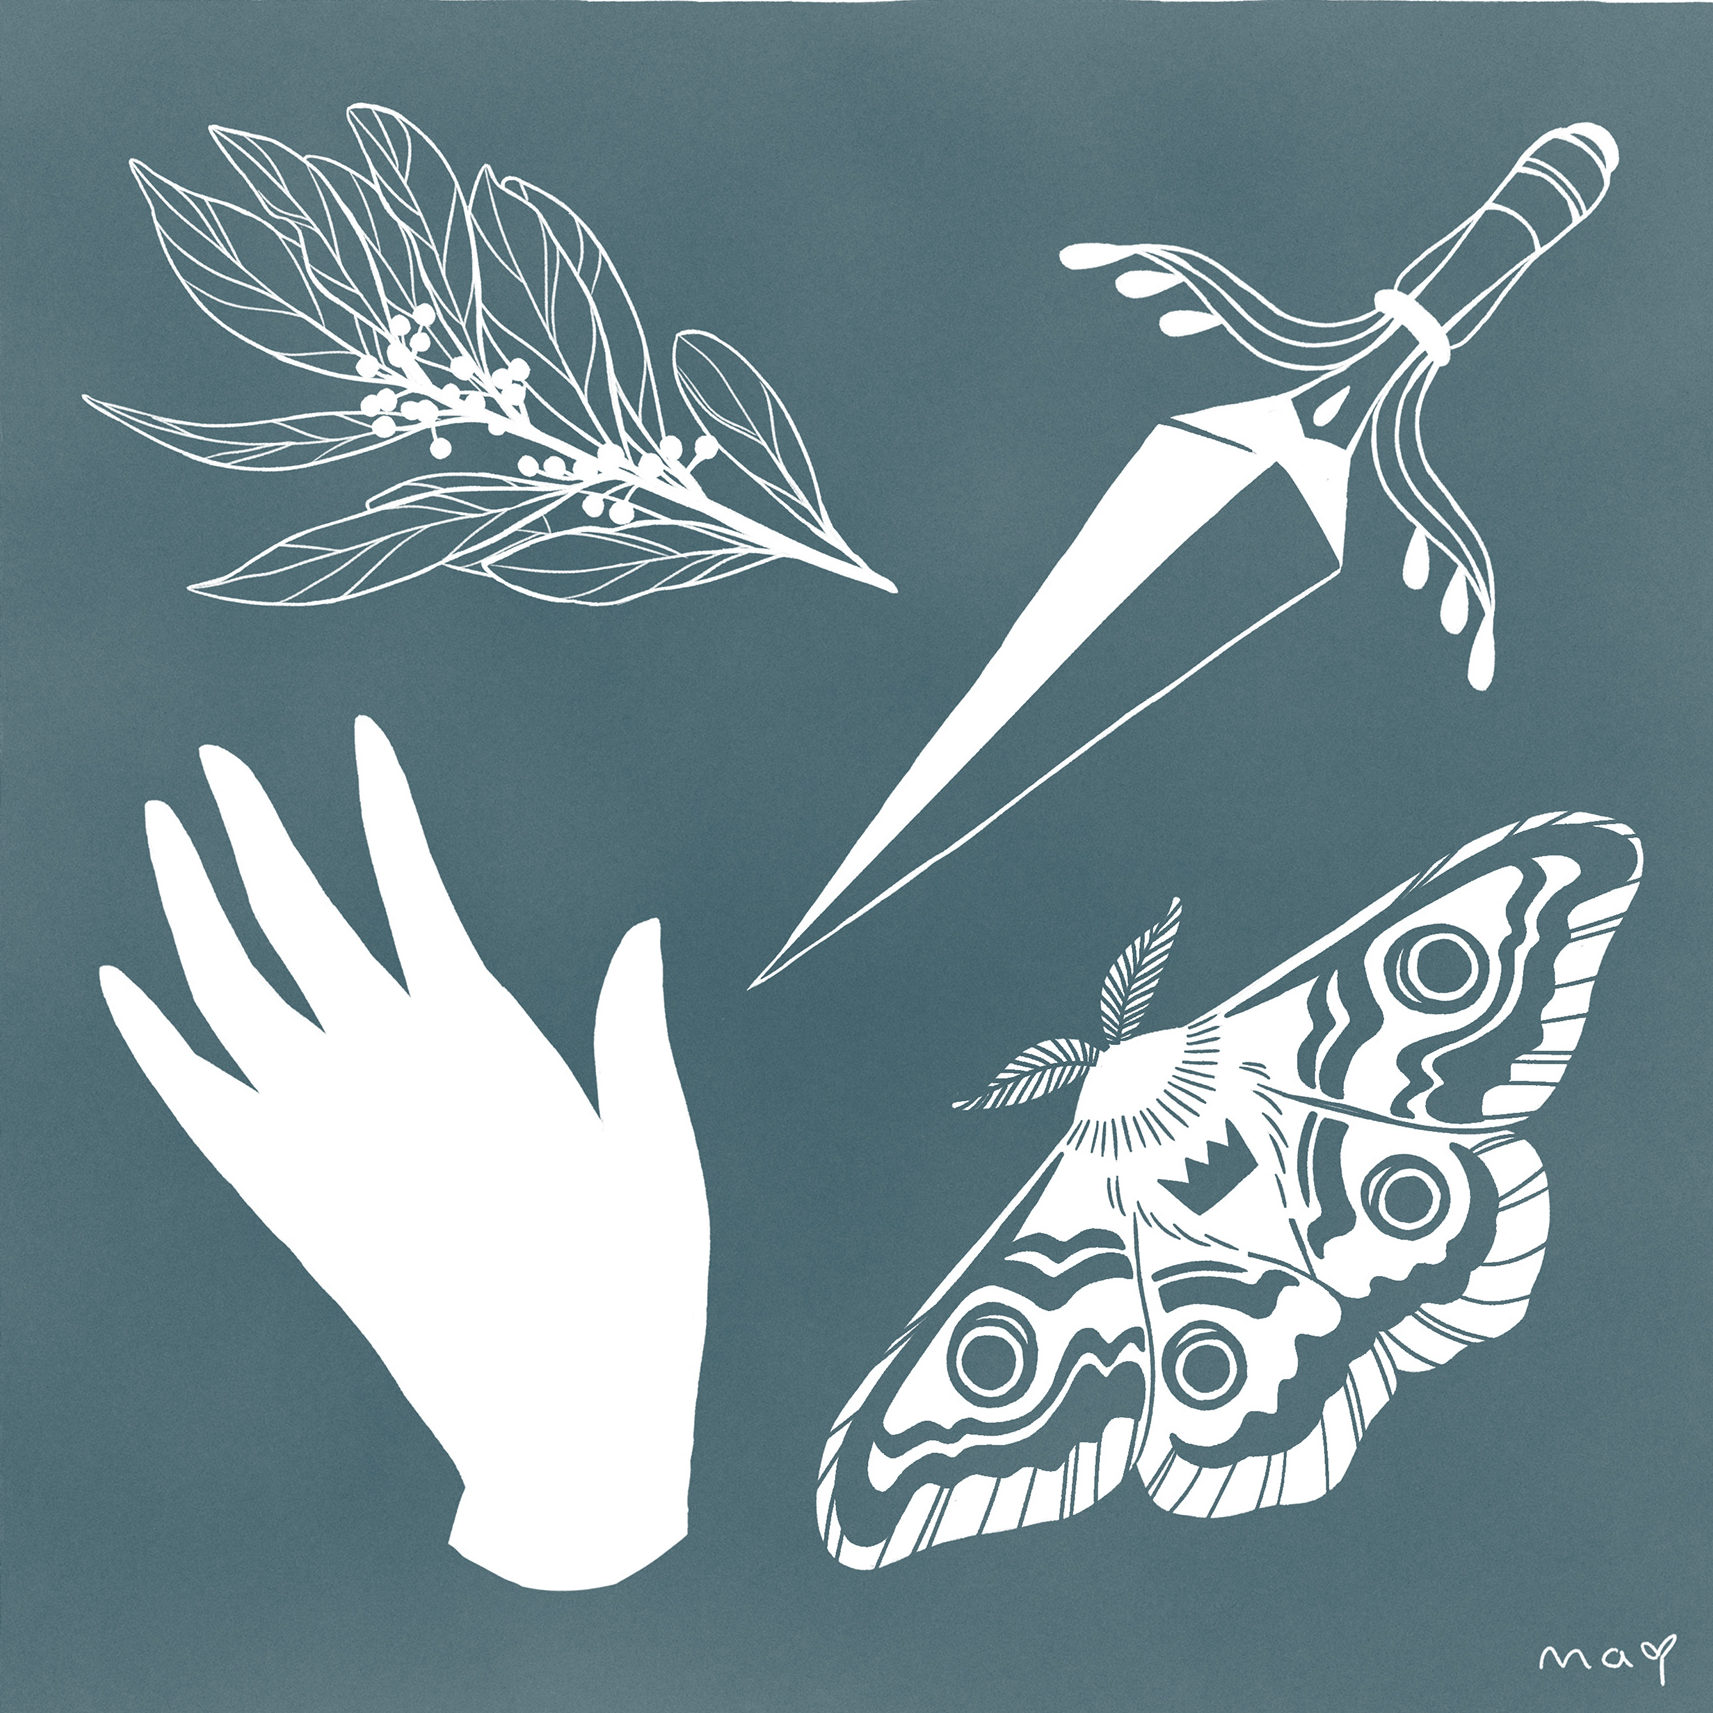 ace of swords illustration